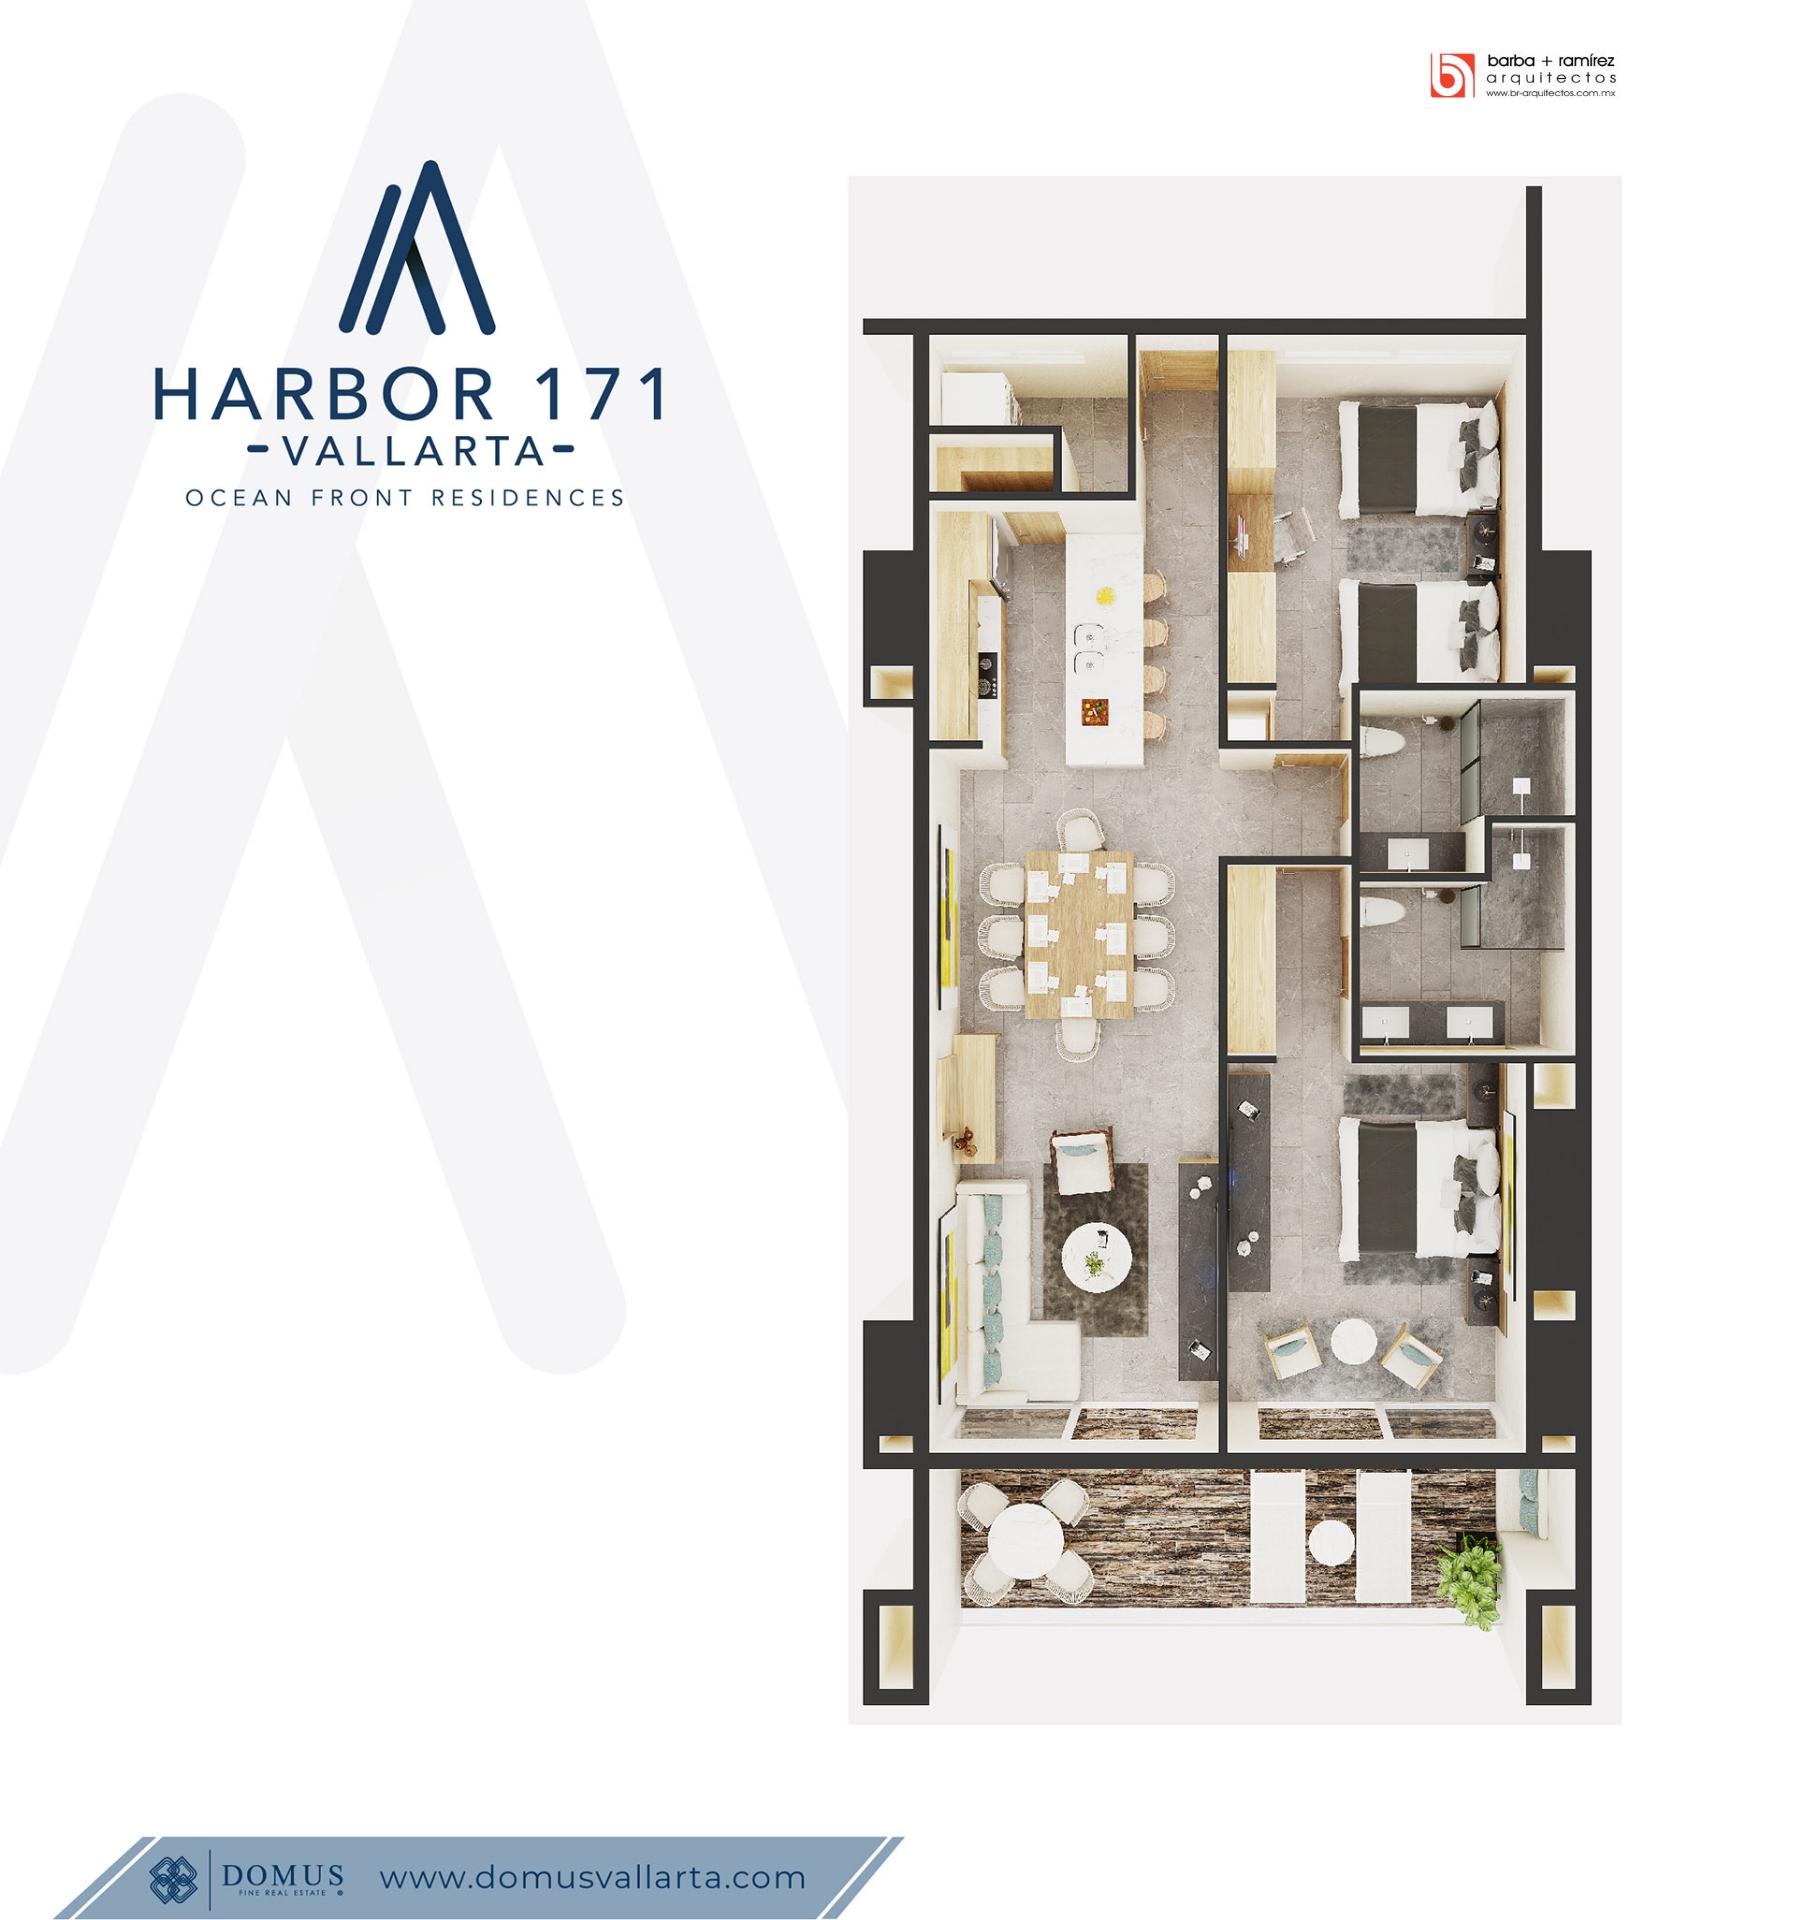 Unit 2706 Blueprint - Harbor 171